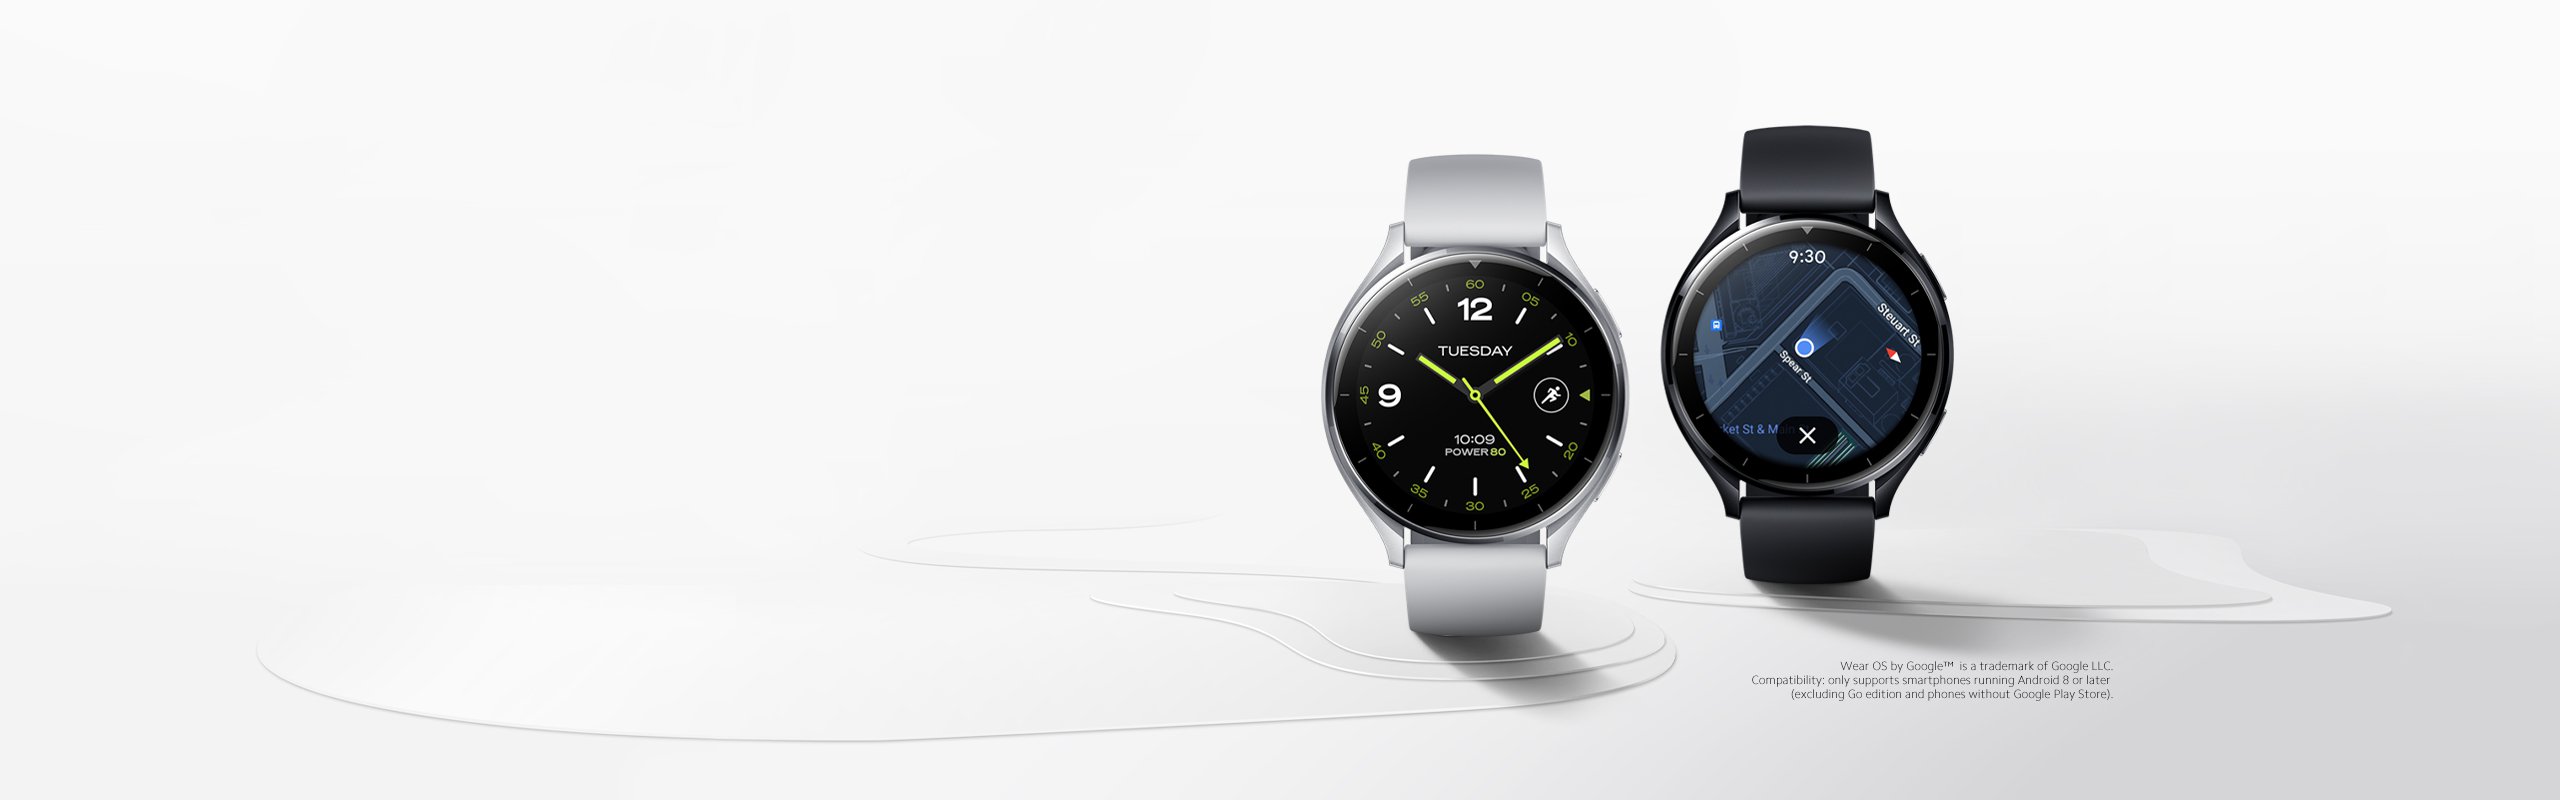 Xiaomi Watch 2 with Wear OS announced; Xiaomi Smart Band 8 Pro, and Xiaomi  Watch S3 go global